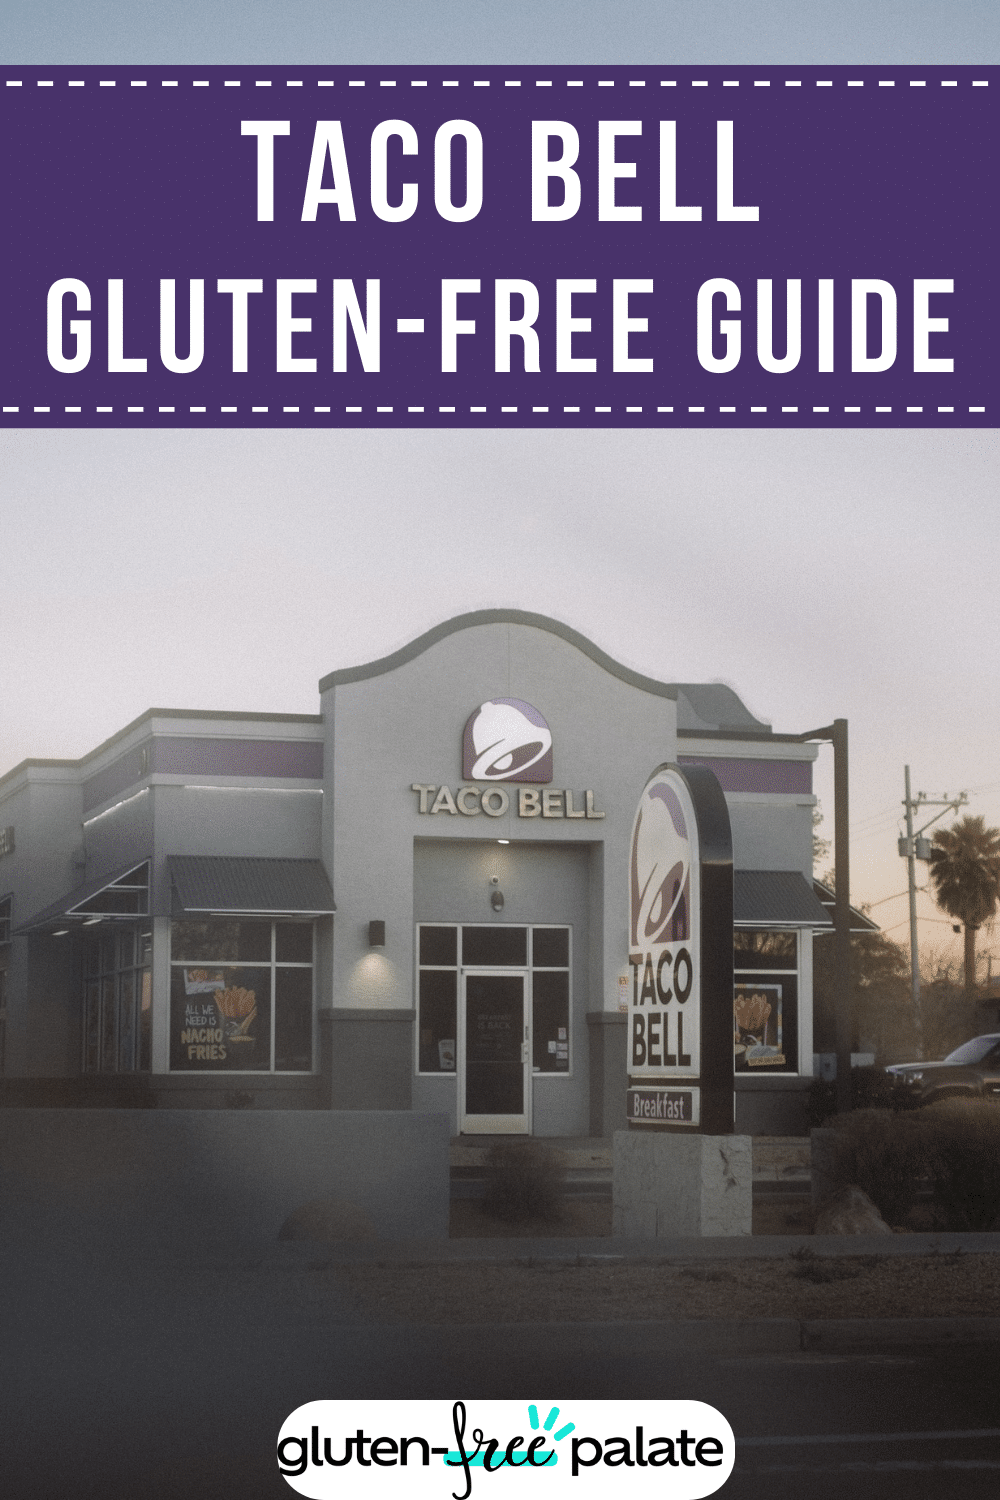 Taco bell gluten-free guide.